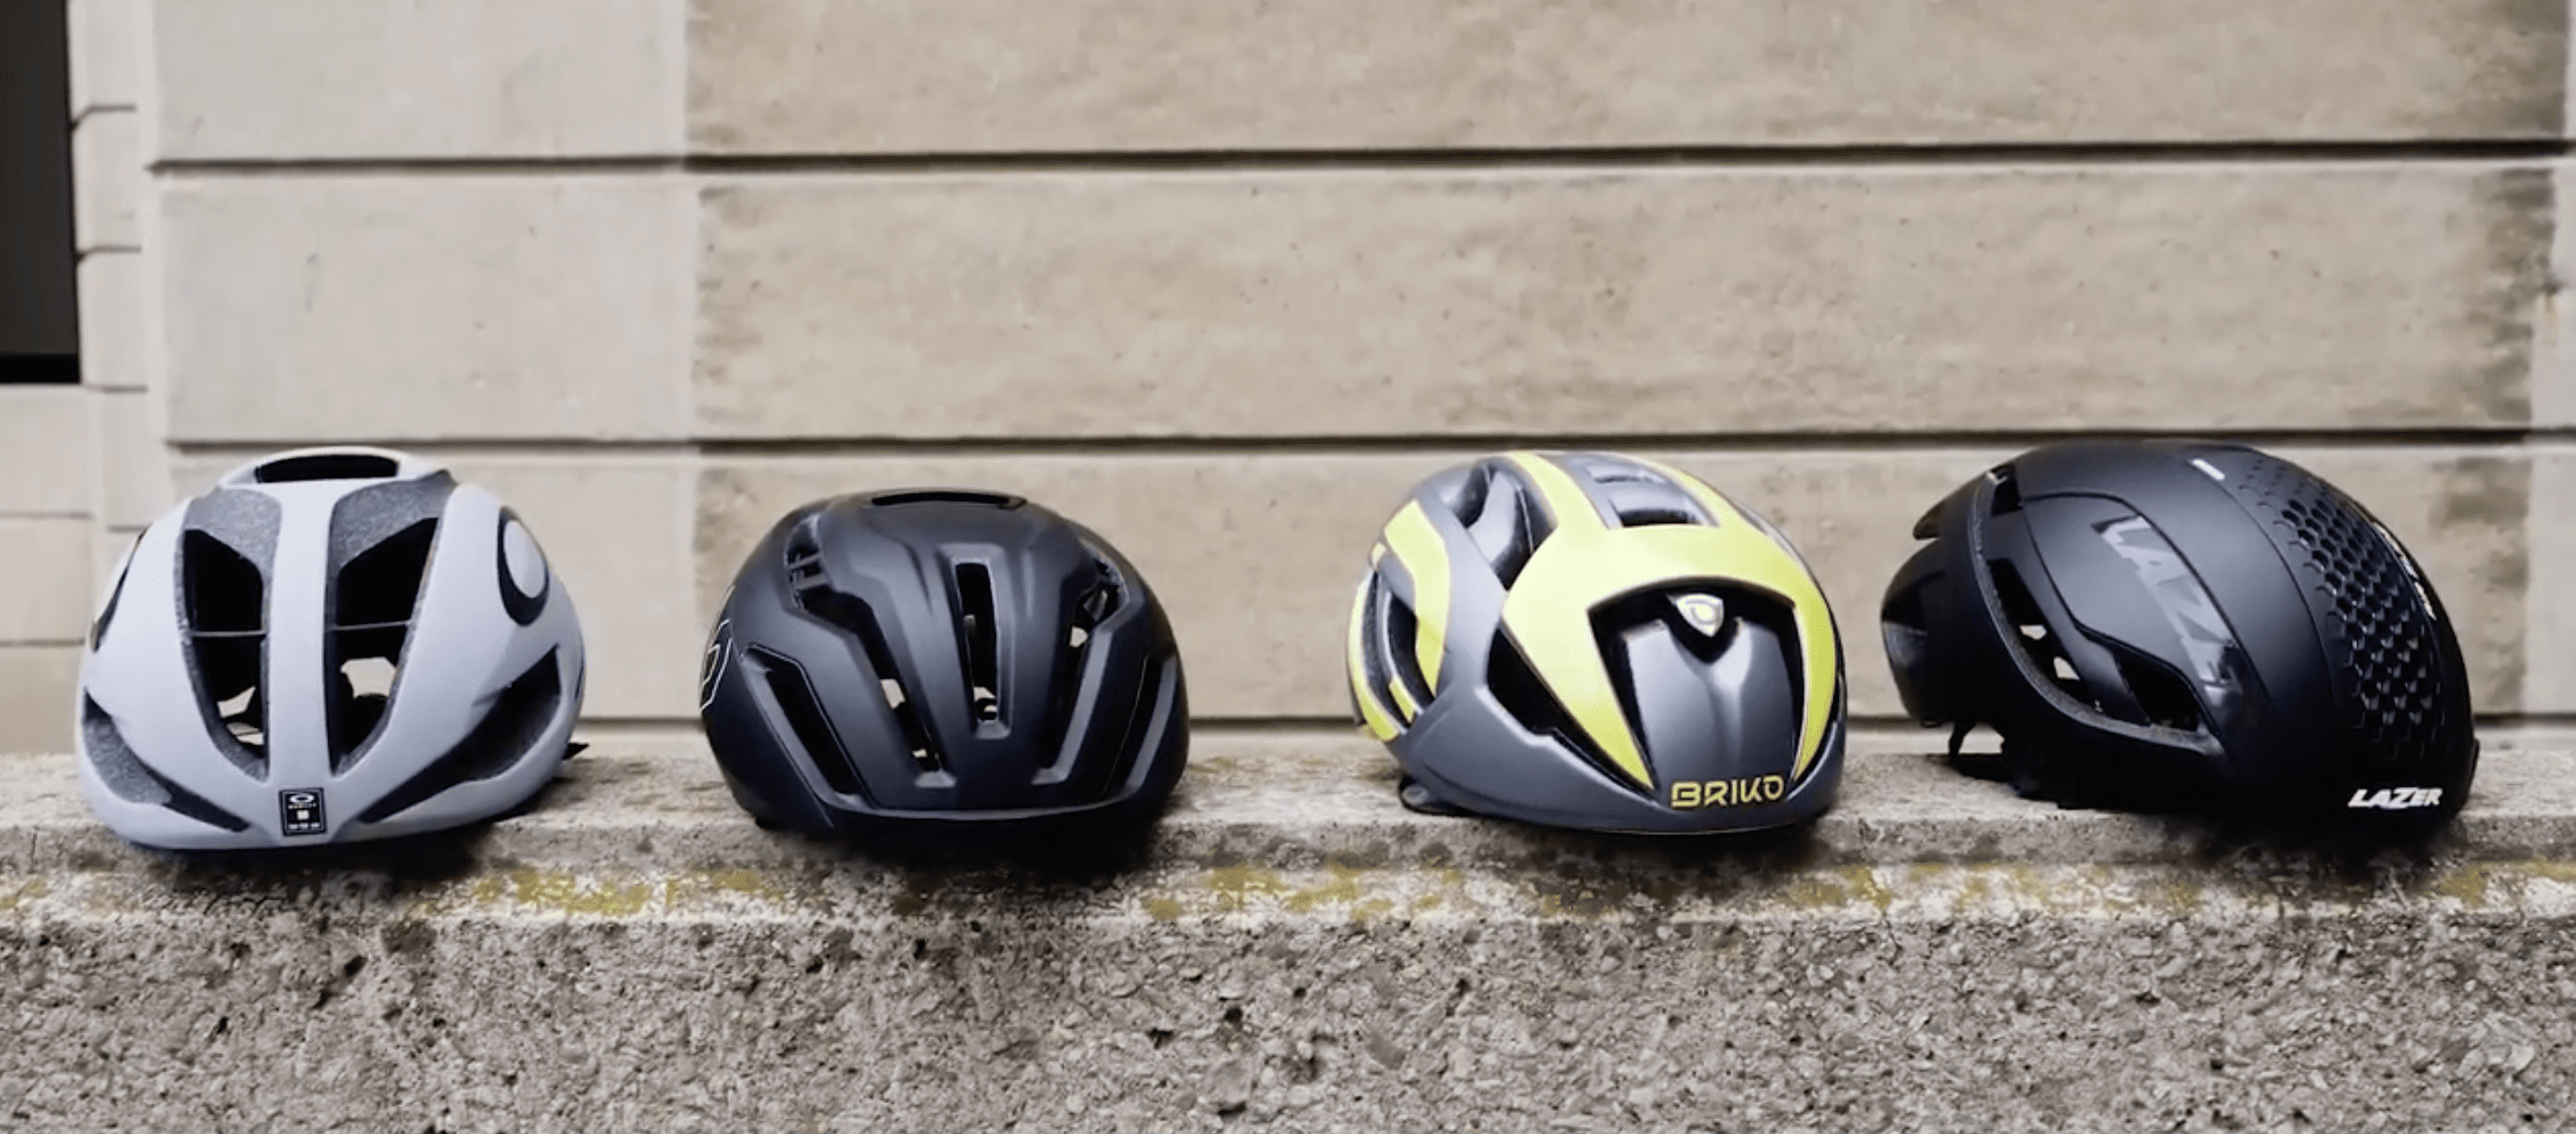 Aero Road Helmets For 2019 Triathlon Magazine Canada